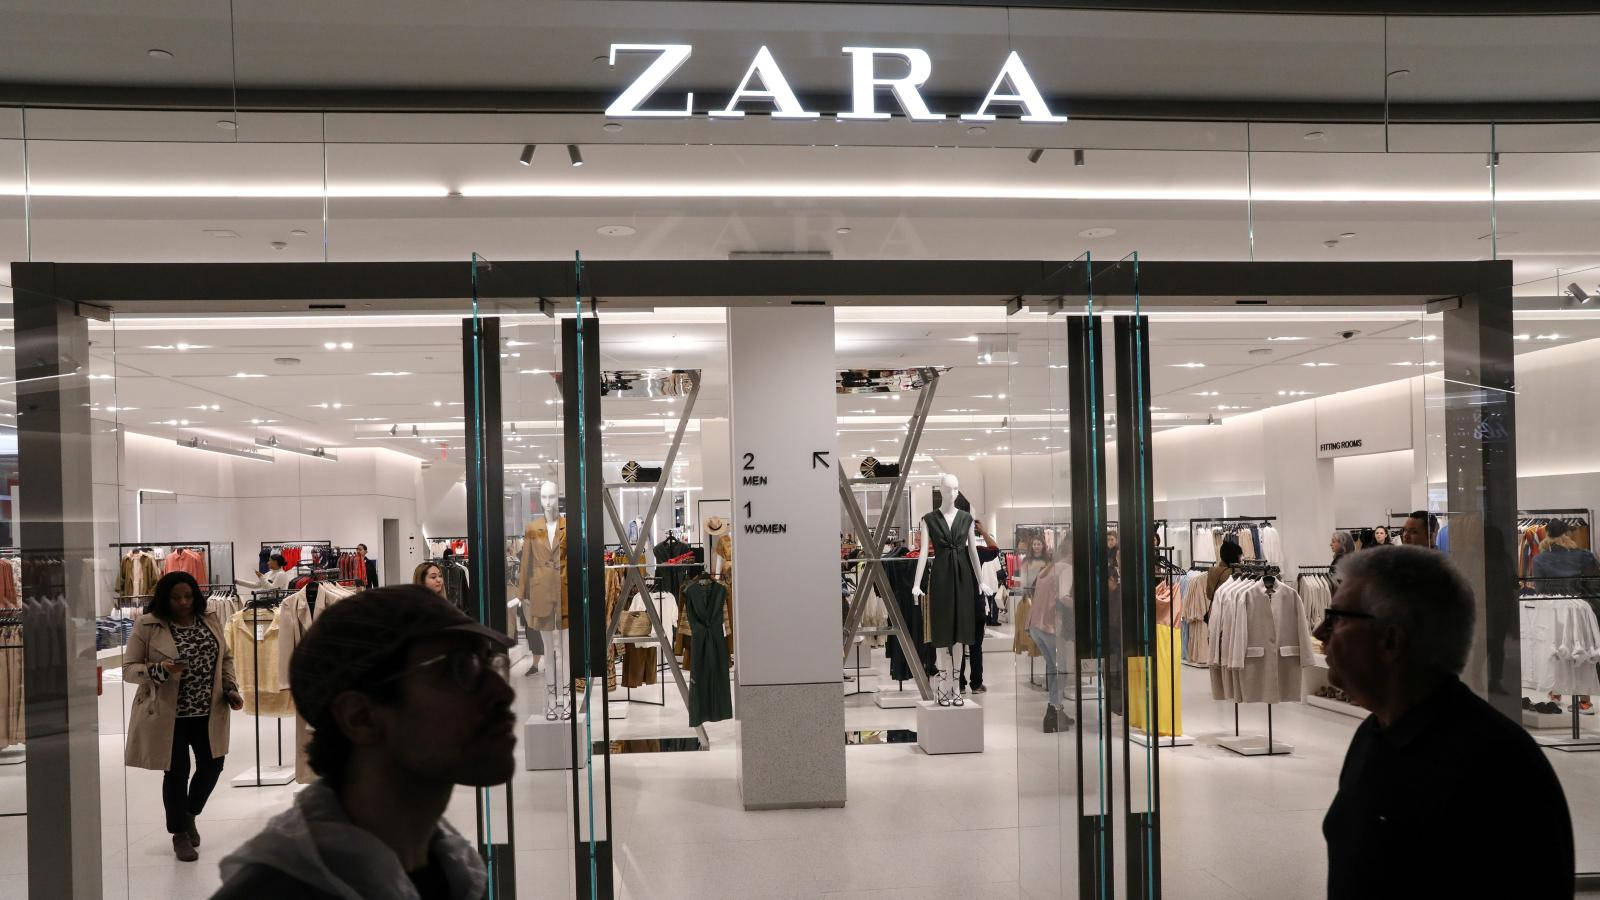 Zara Spanish Apparel Store Background